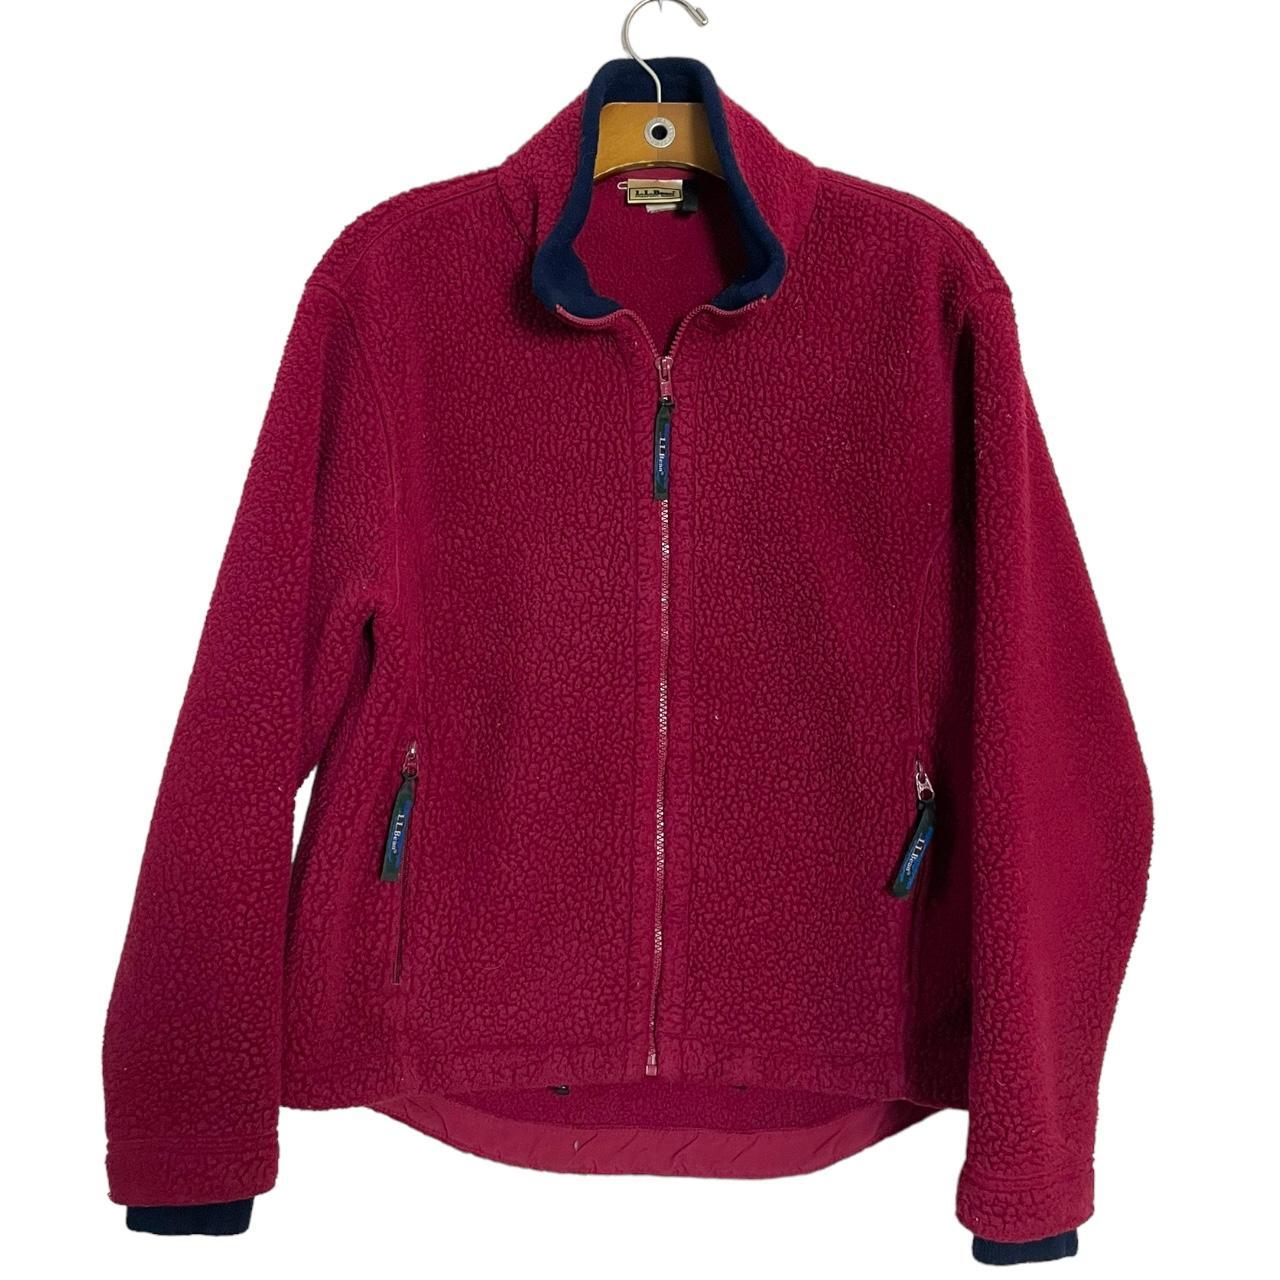 Vintage LL Bean Fleece Super cute 90s jacket - zip... - Depop